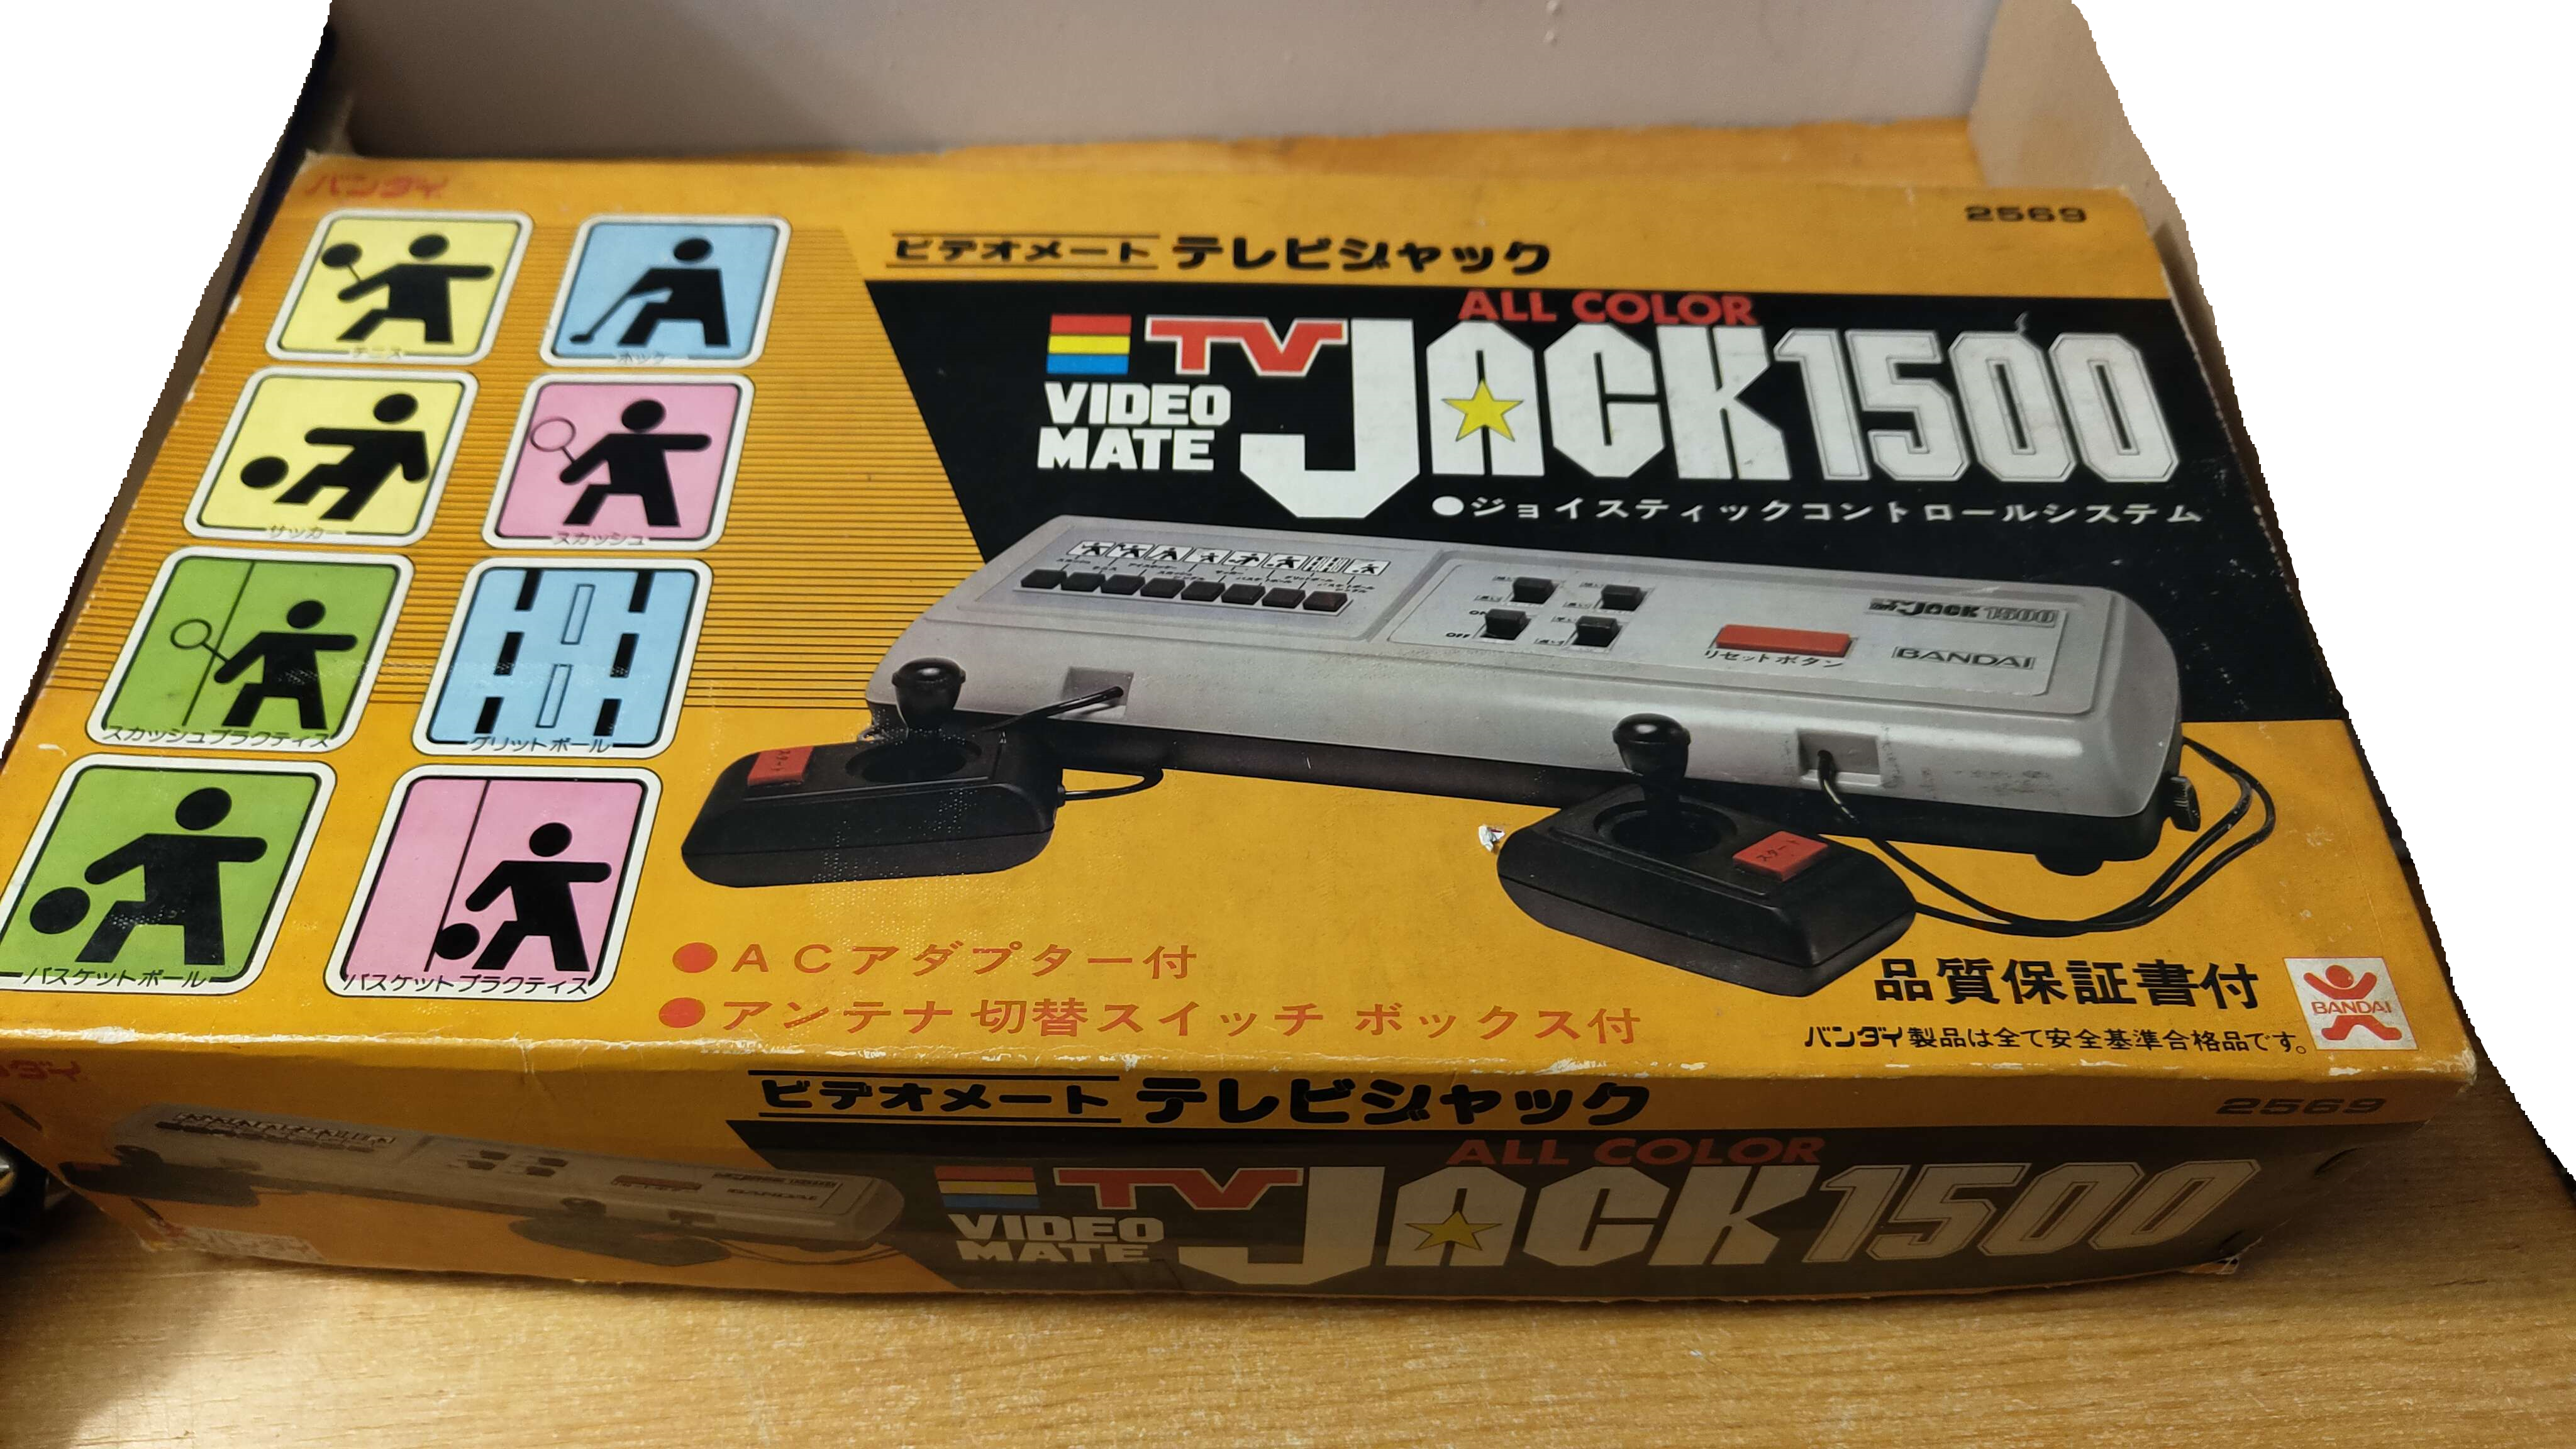  Bandai TV Jack 1500 Grey Console